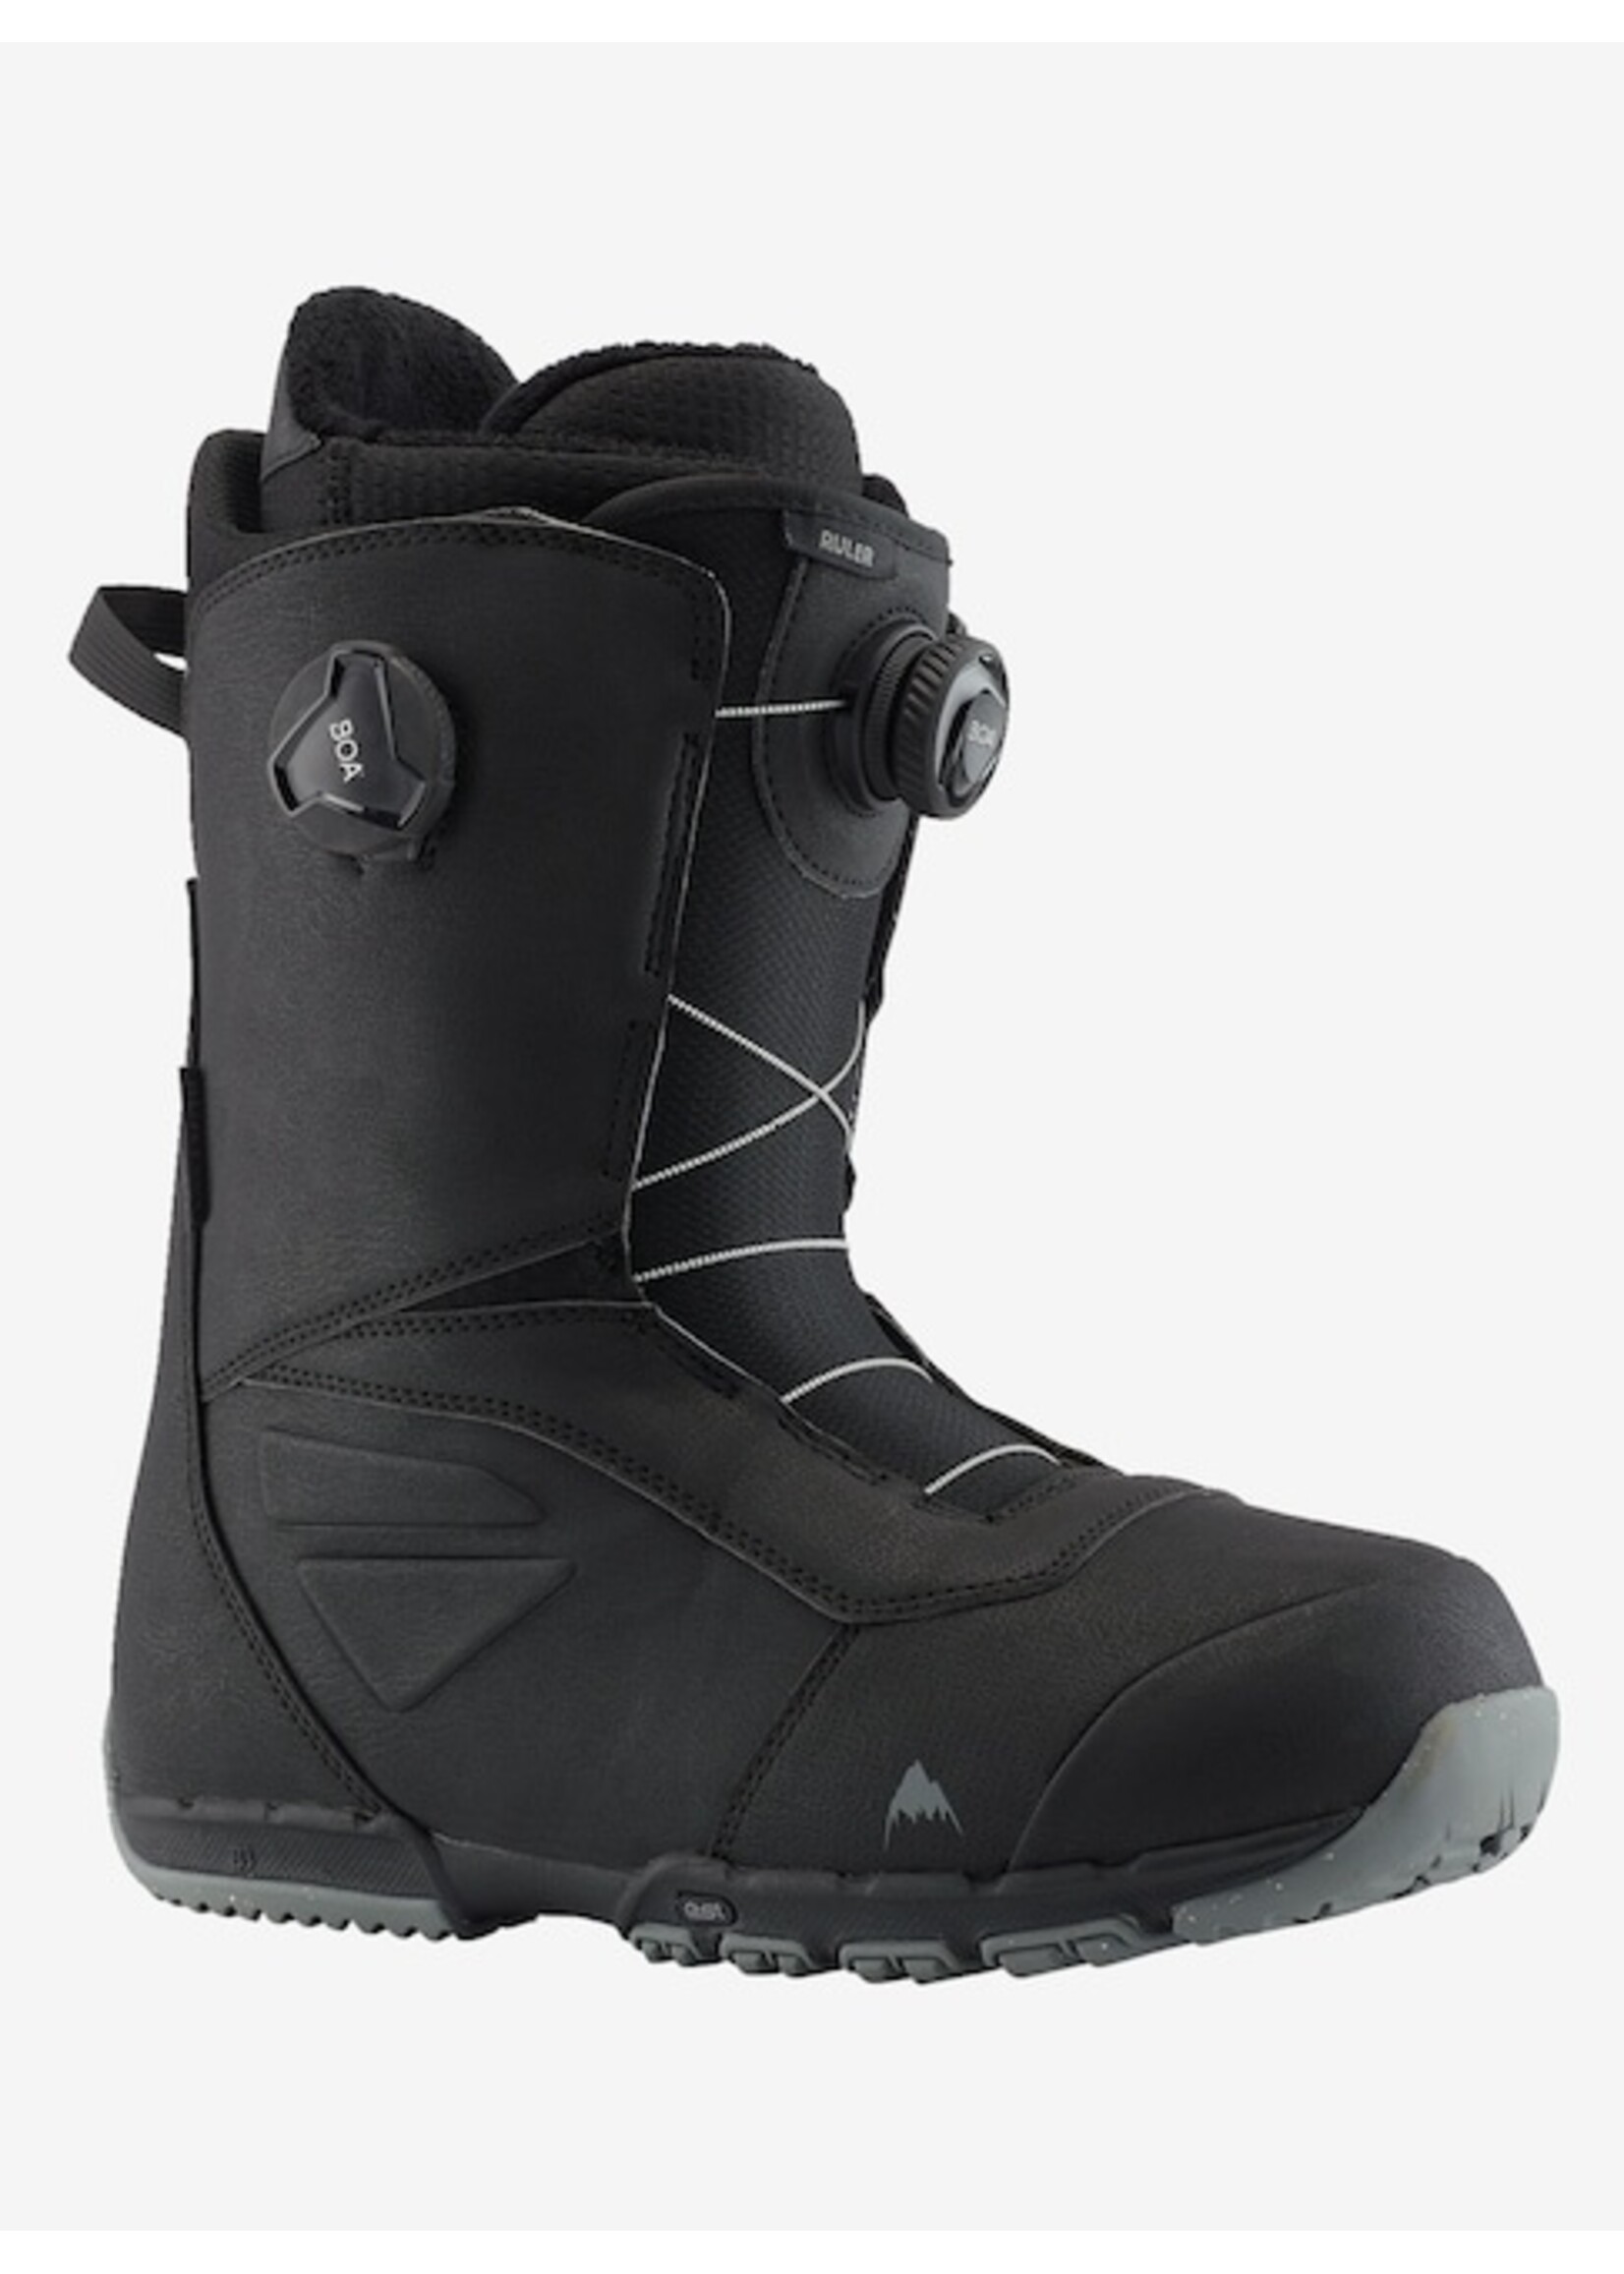 Burton Mens Ruler BOA Snowboard Boots - Black